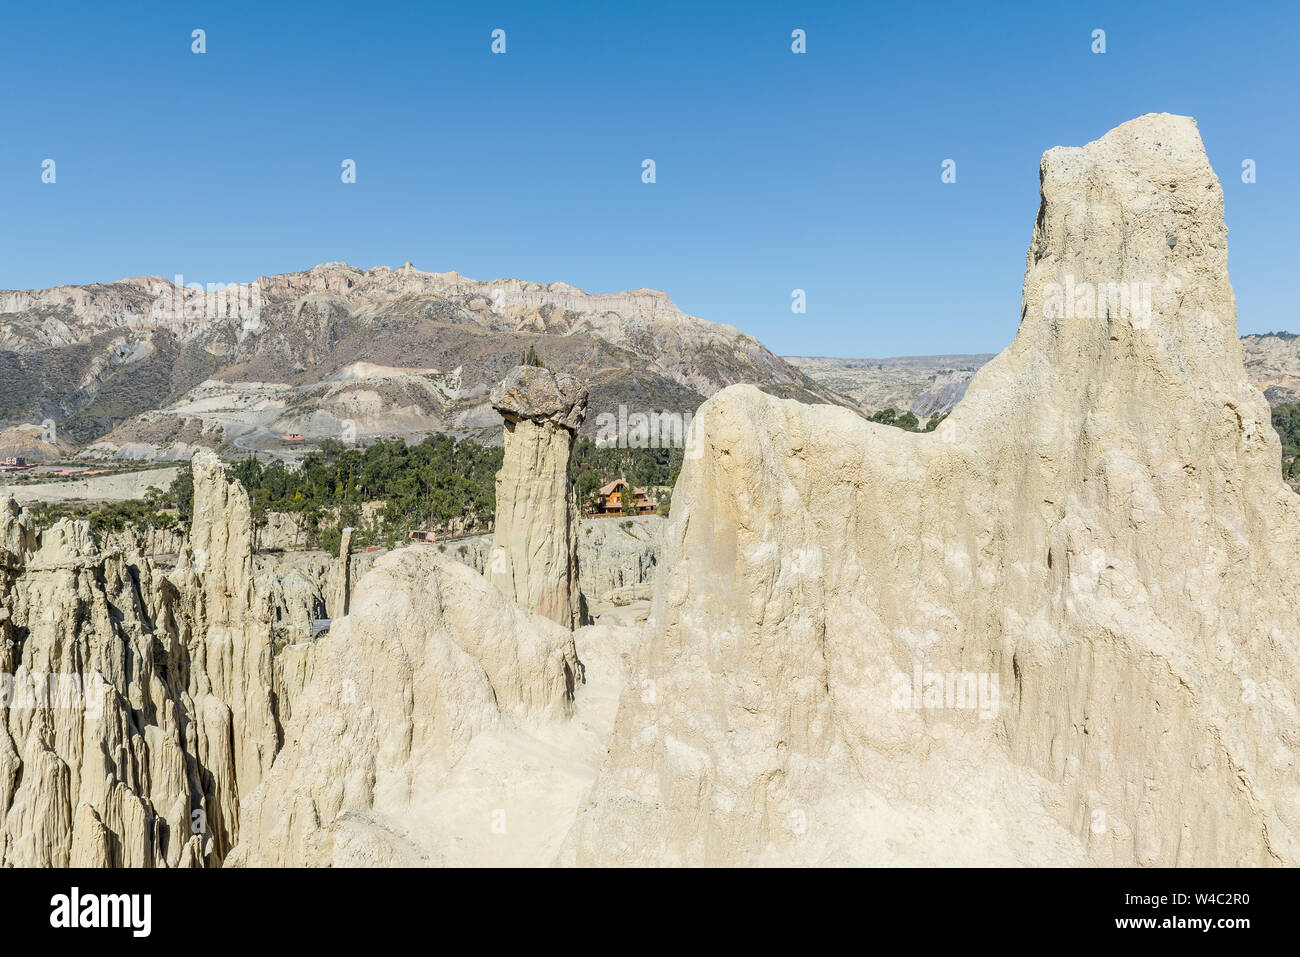 Sandstone formations in Valle de la Luna (Moon Valley) near La Paz, Bolivia Stock Photo